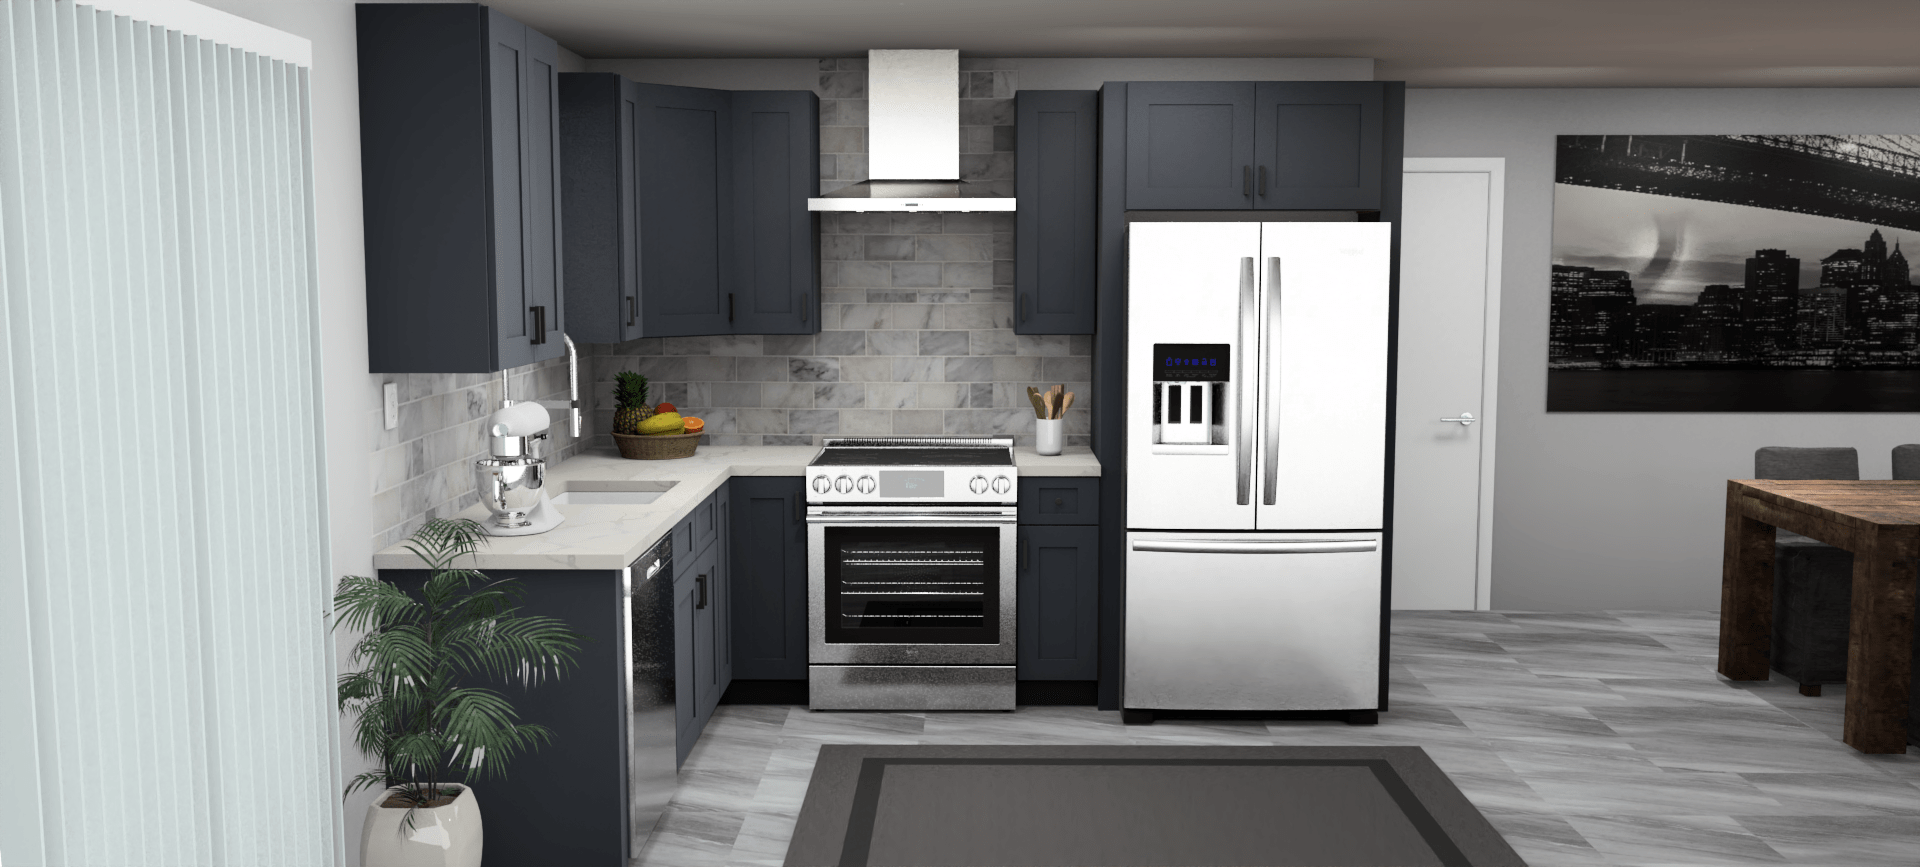 Fabuwood Allure Galaxy Indigo 8 x 10 L Shaped Kitchen Front Layout Photo